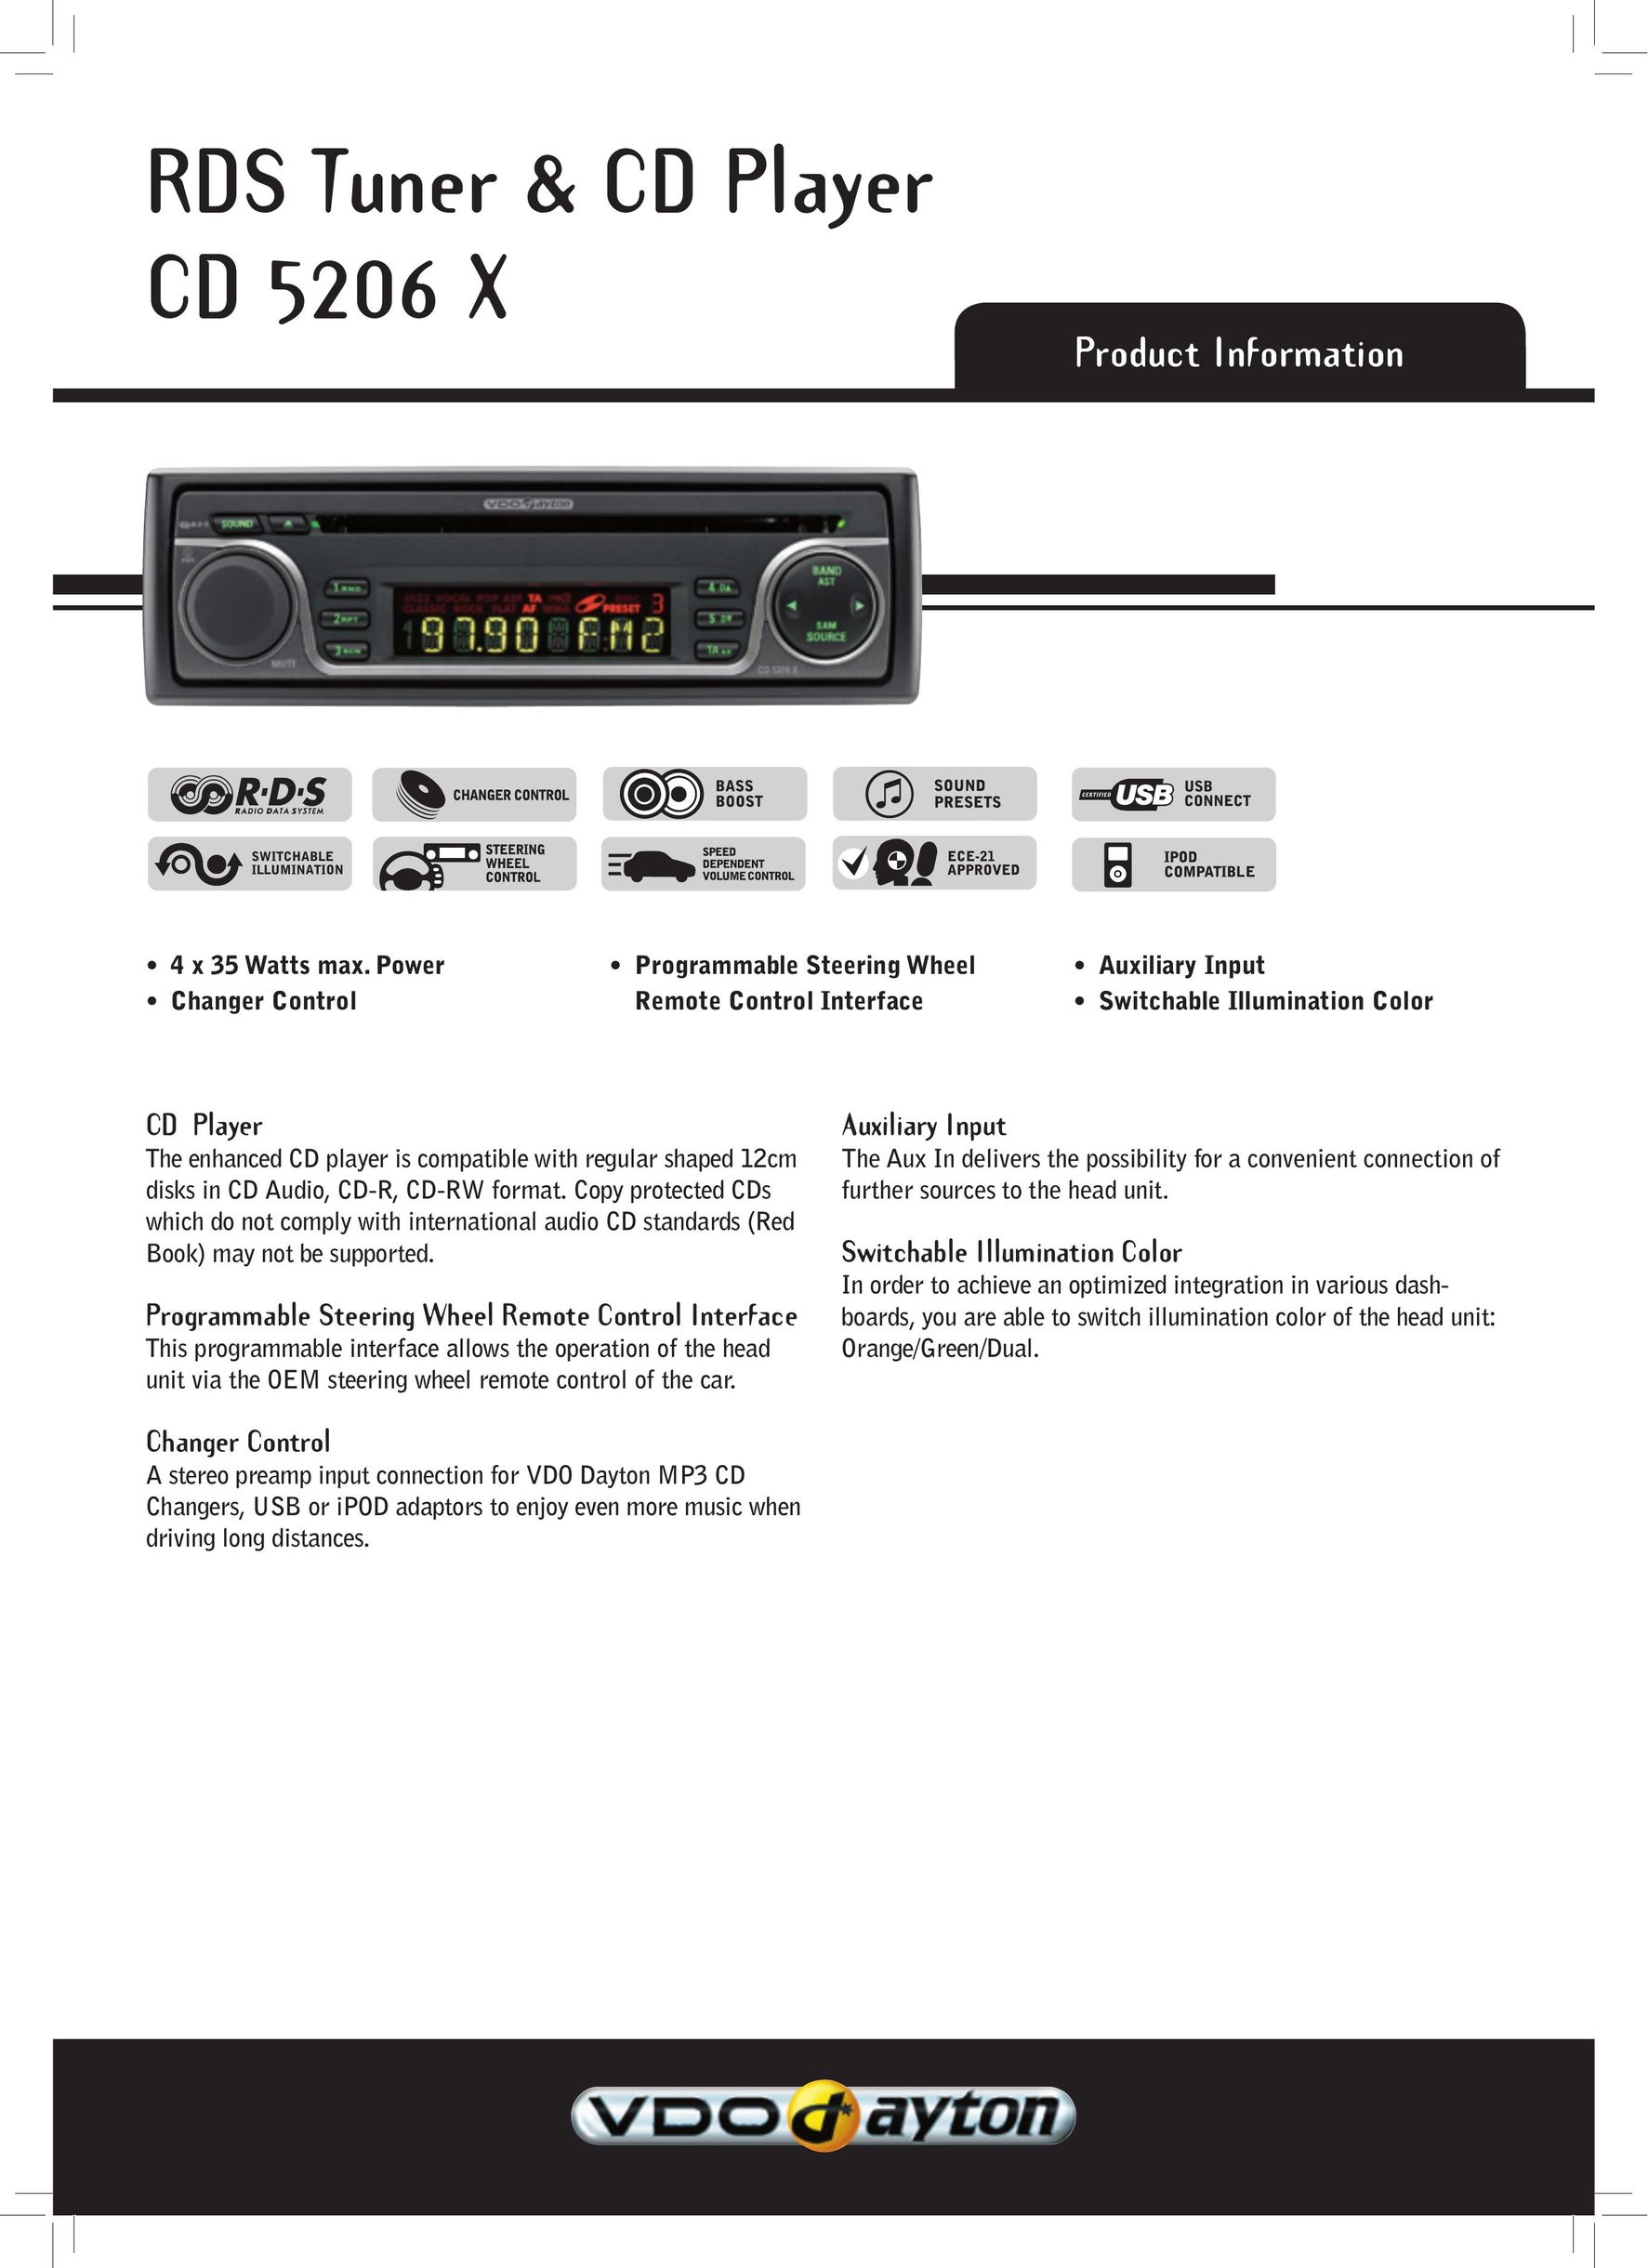 VDO Dayton CD 5206 X CD Player User Manual